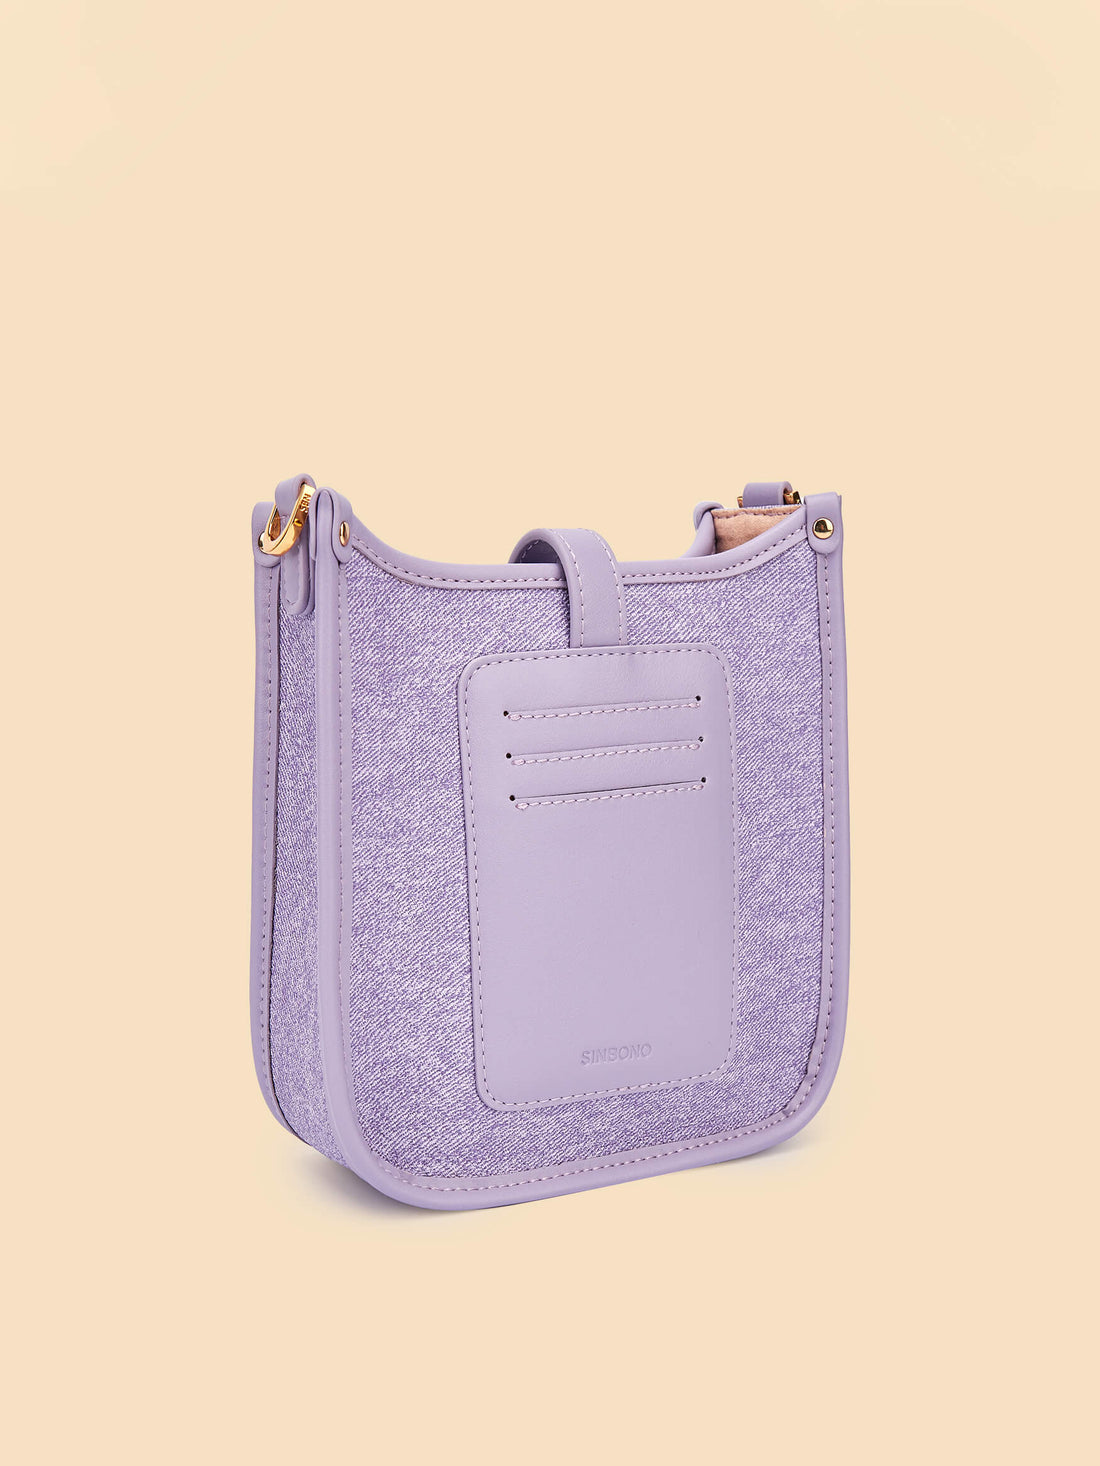 SINBONO Purple Crossbody Bag- High-quality Soft Vegan Leather Bag